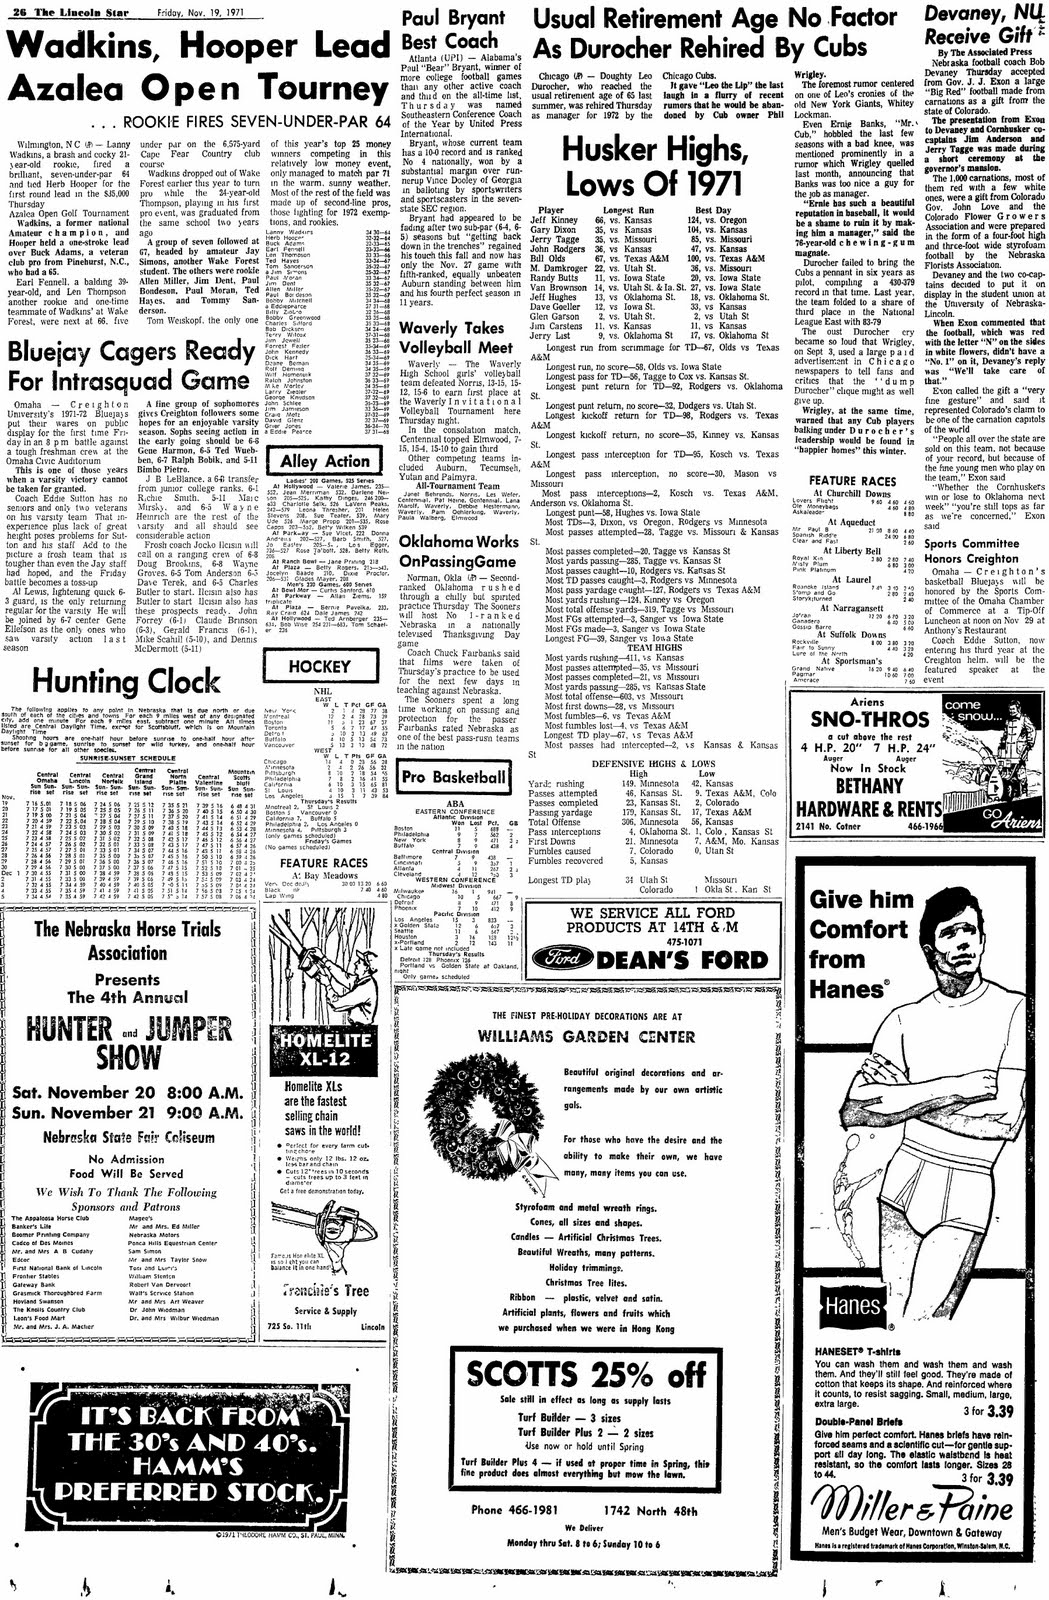 ... Ogden - Historical Newspapers - The Lincoln Star, Lincoln, Nebraska